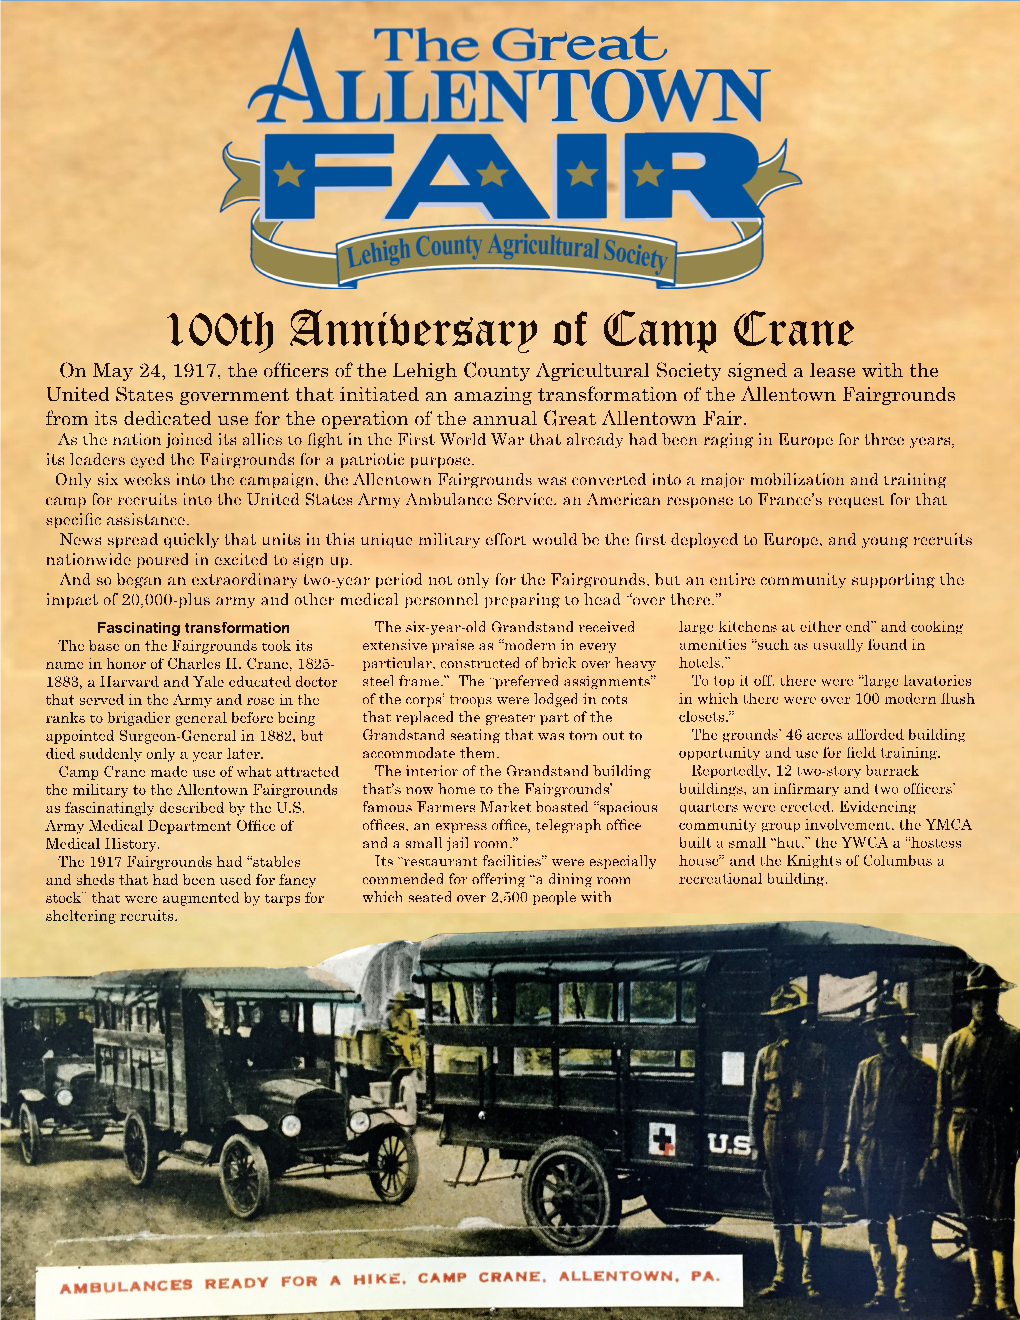 Details About Camp Crane at the Allentown Fairgrounds